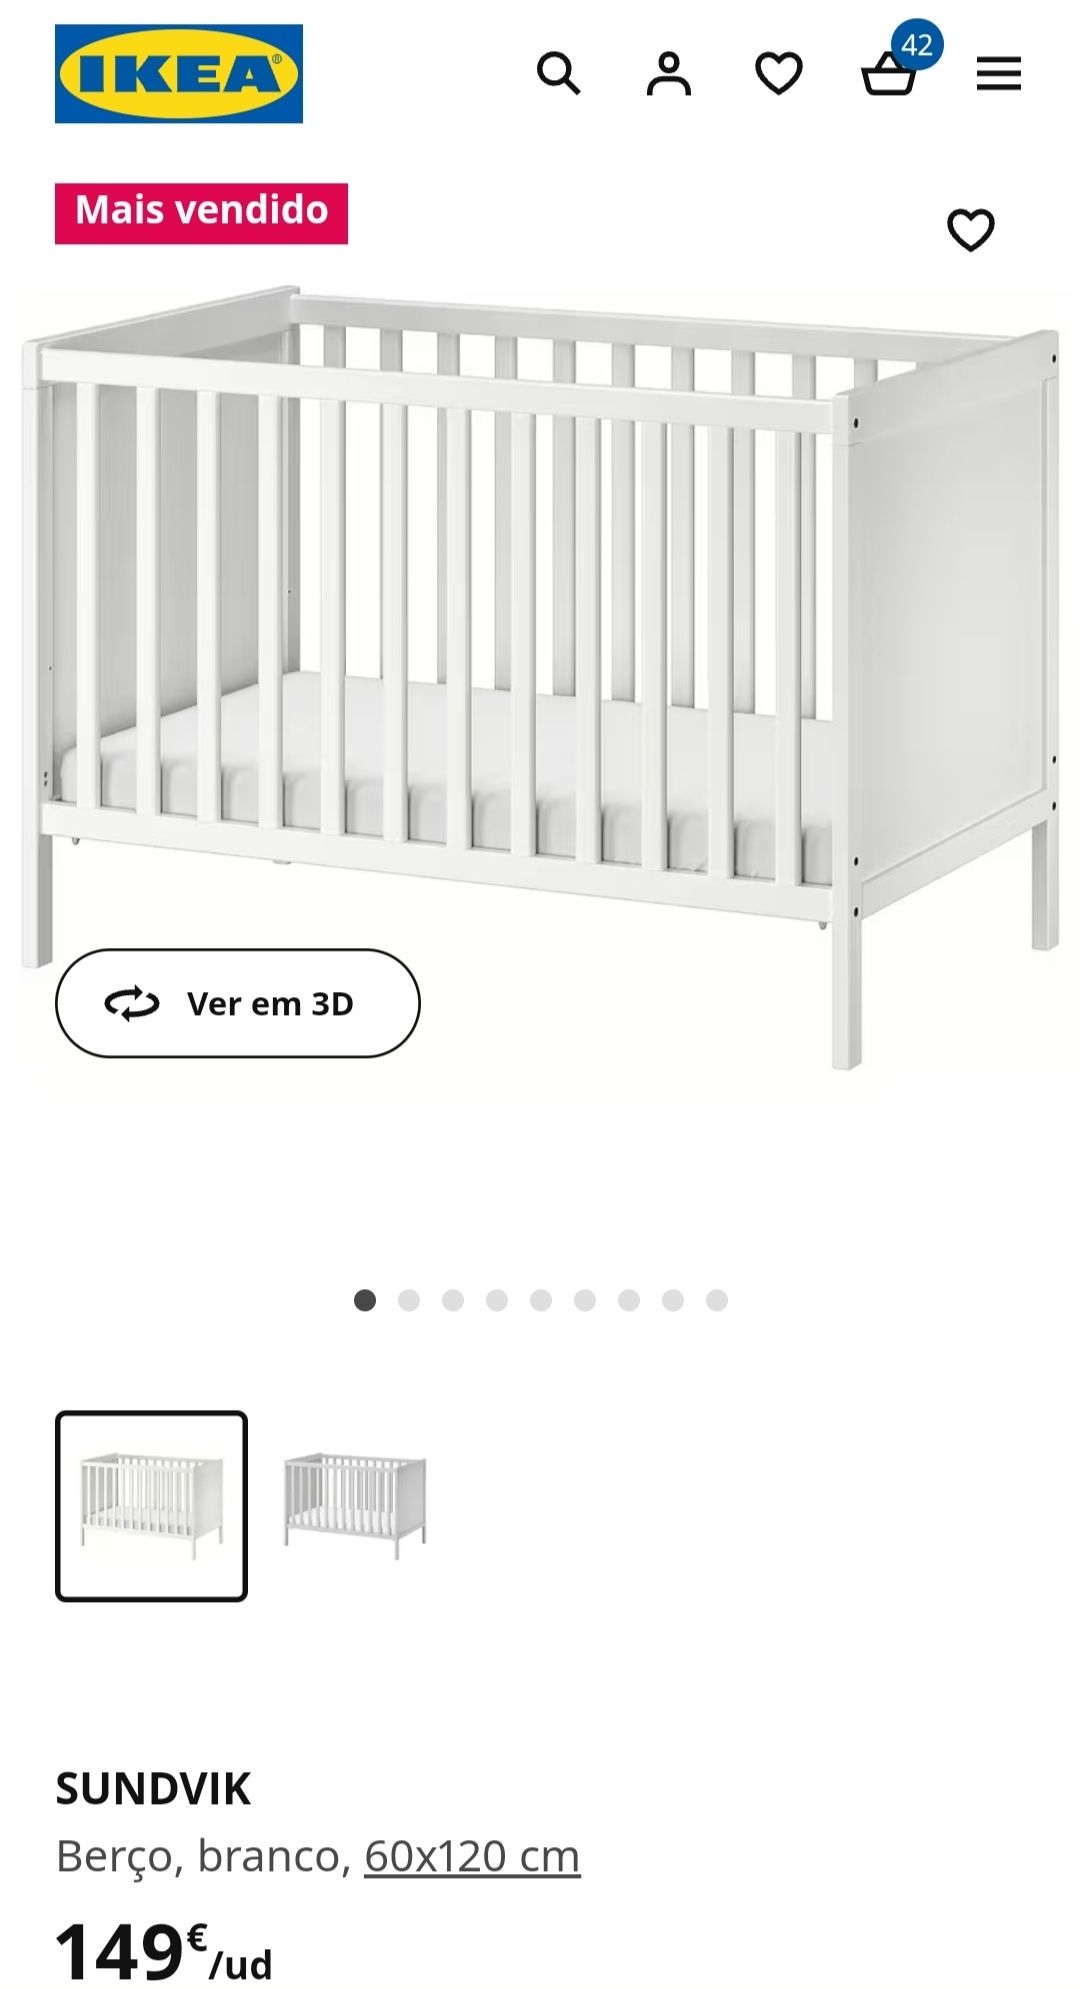 SUNDVIK Berço, branco, 60x120 cm - IKEA